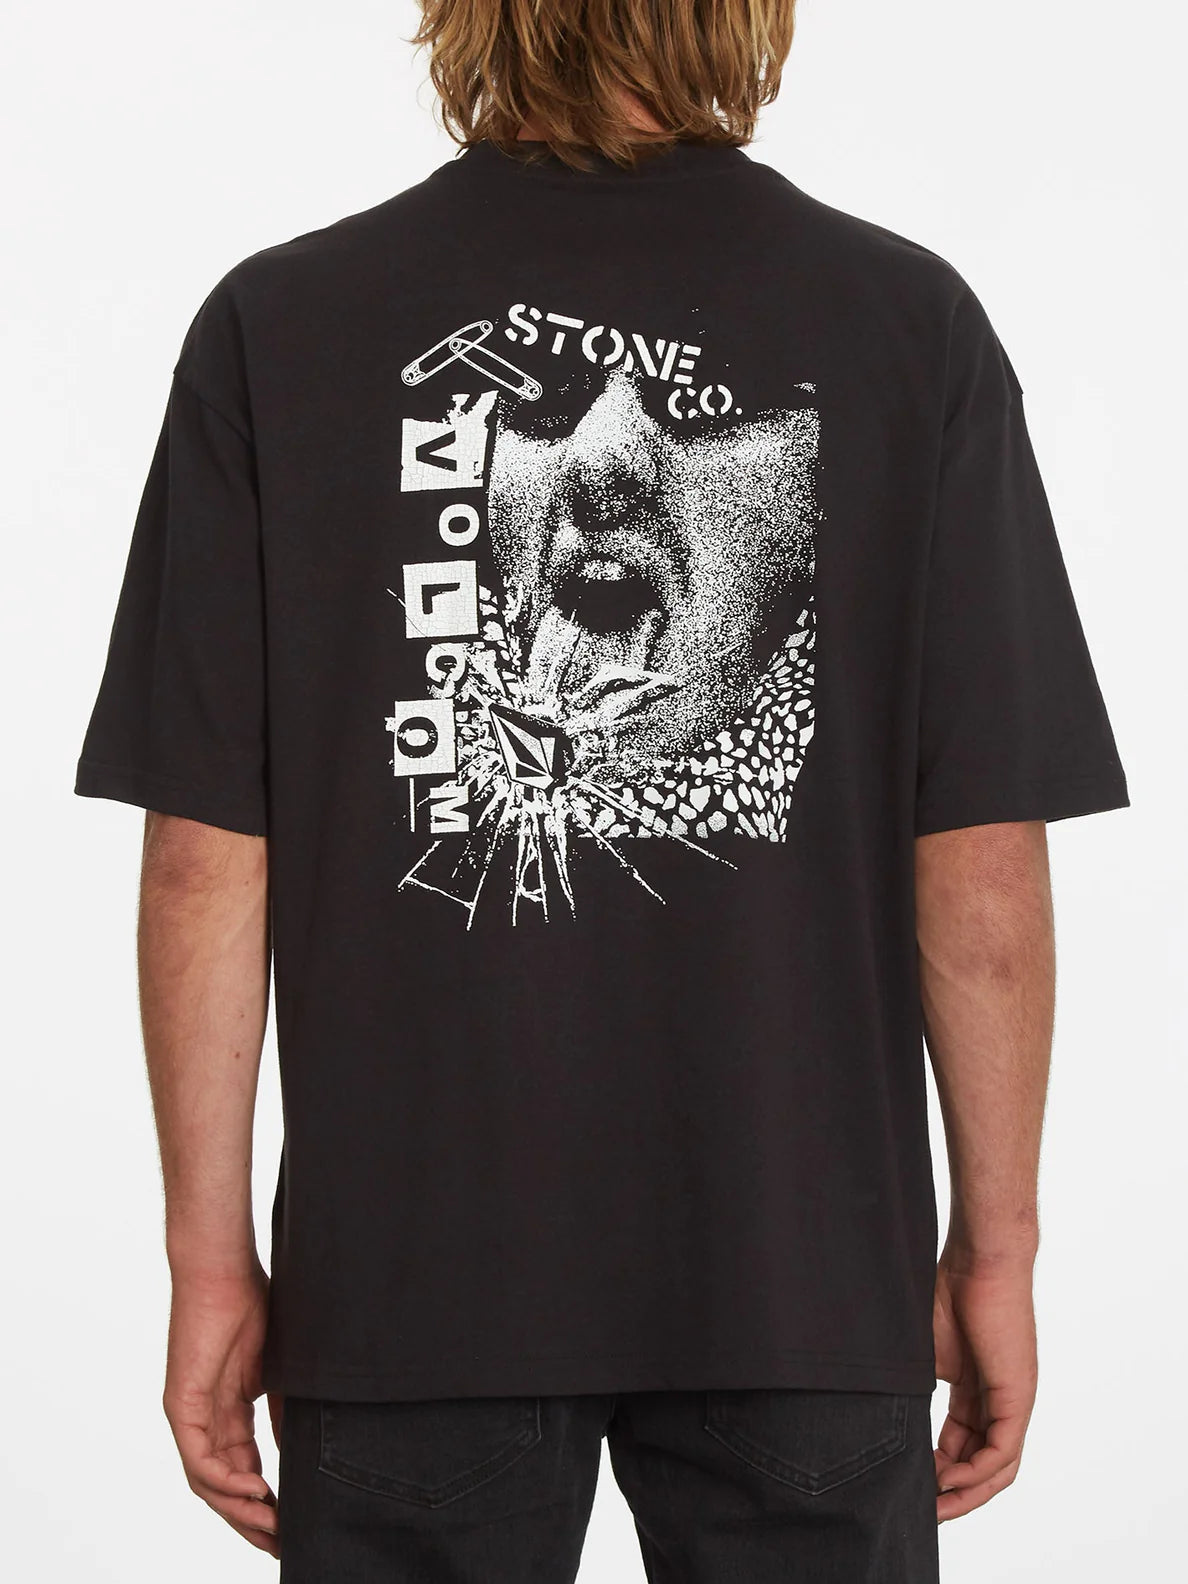 Camiseta Volcom Safetytee Black | surfdevils.com